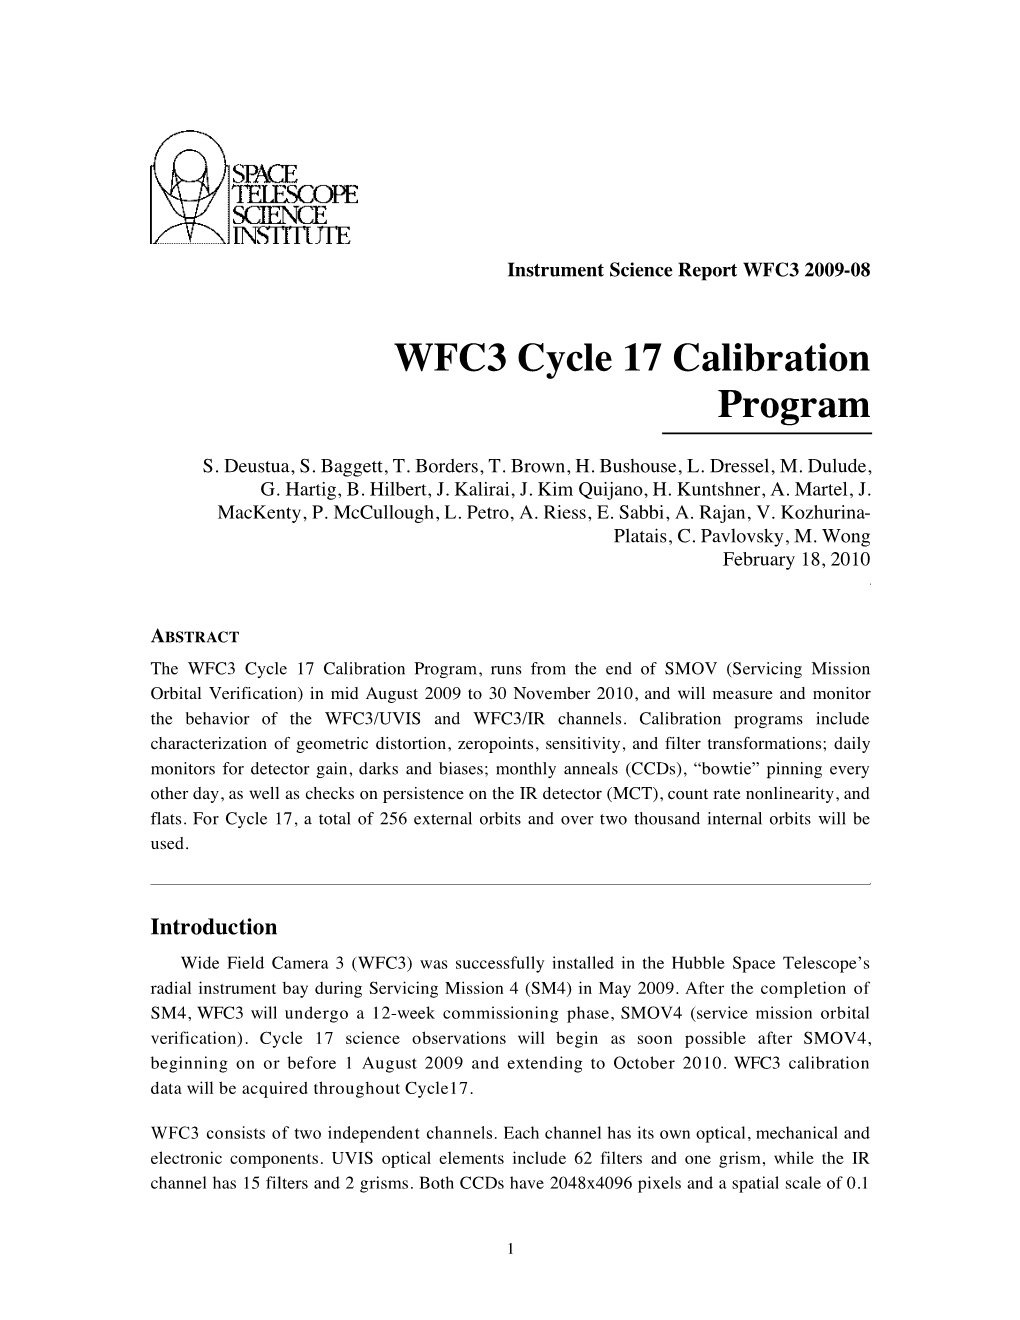 WFC3 Cycle 17 Calibration Program